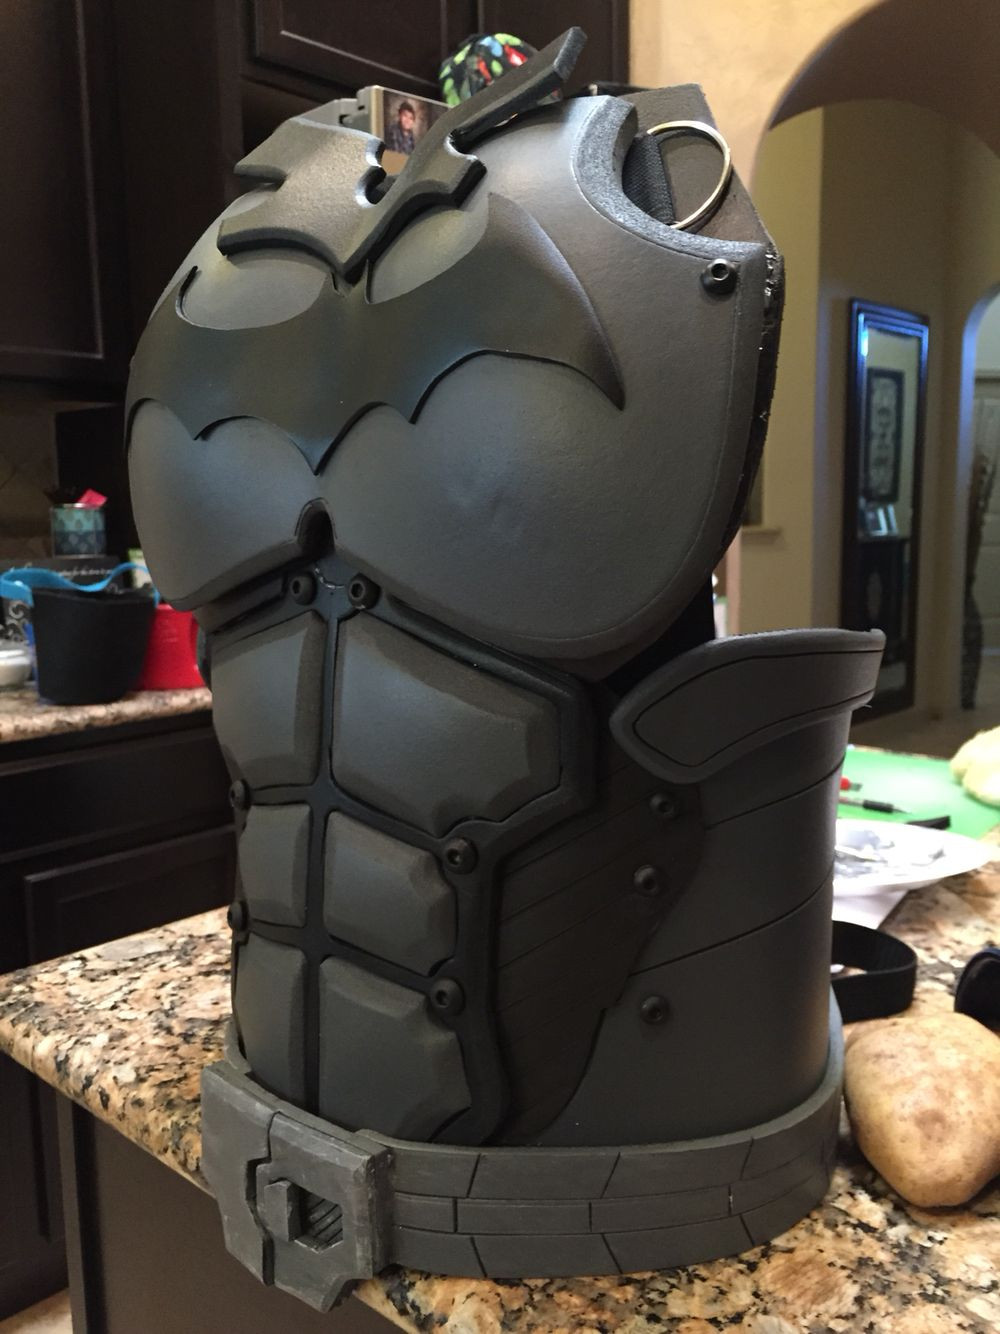 Best ideas about DIY Body Armor
. Save or Pin Work in progress chest piece batman arkham origins cosplay Now.